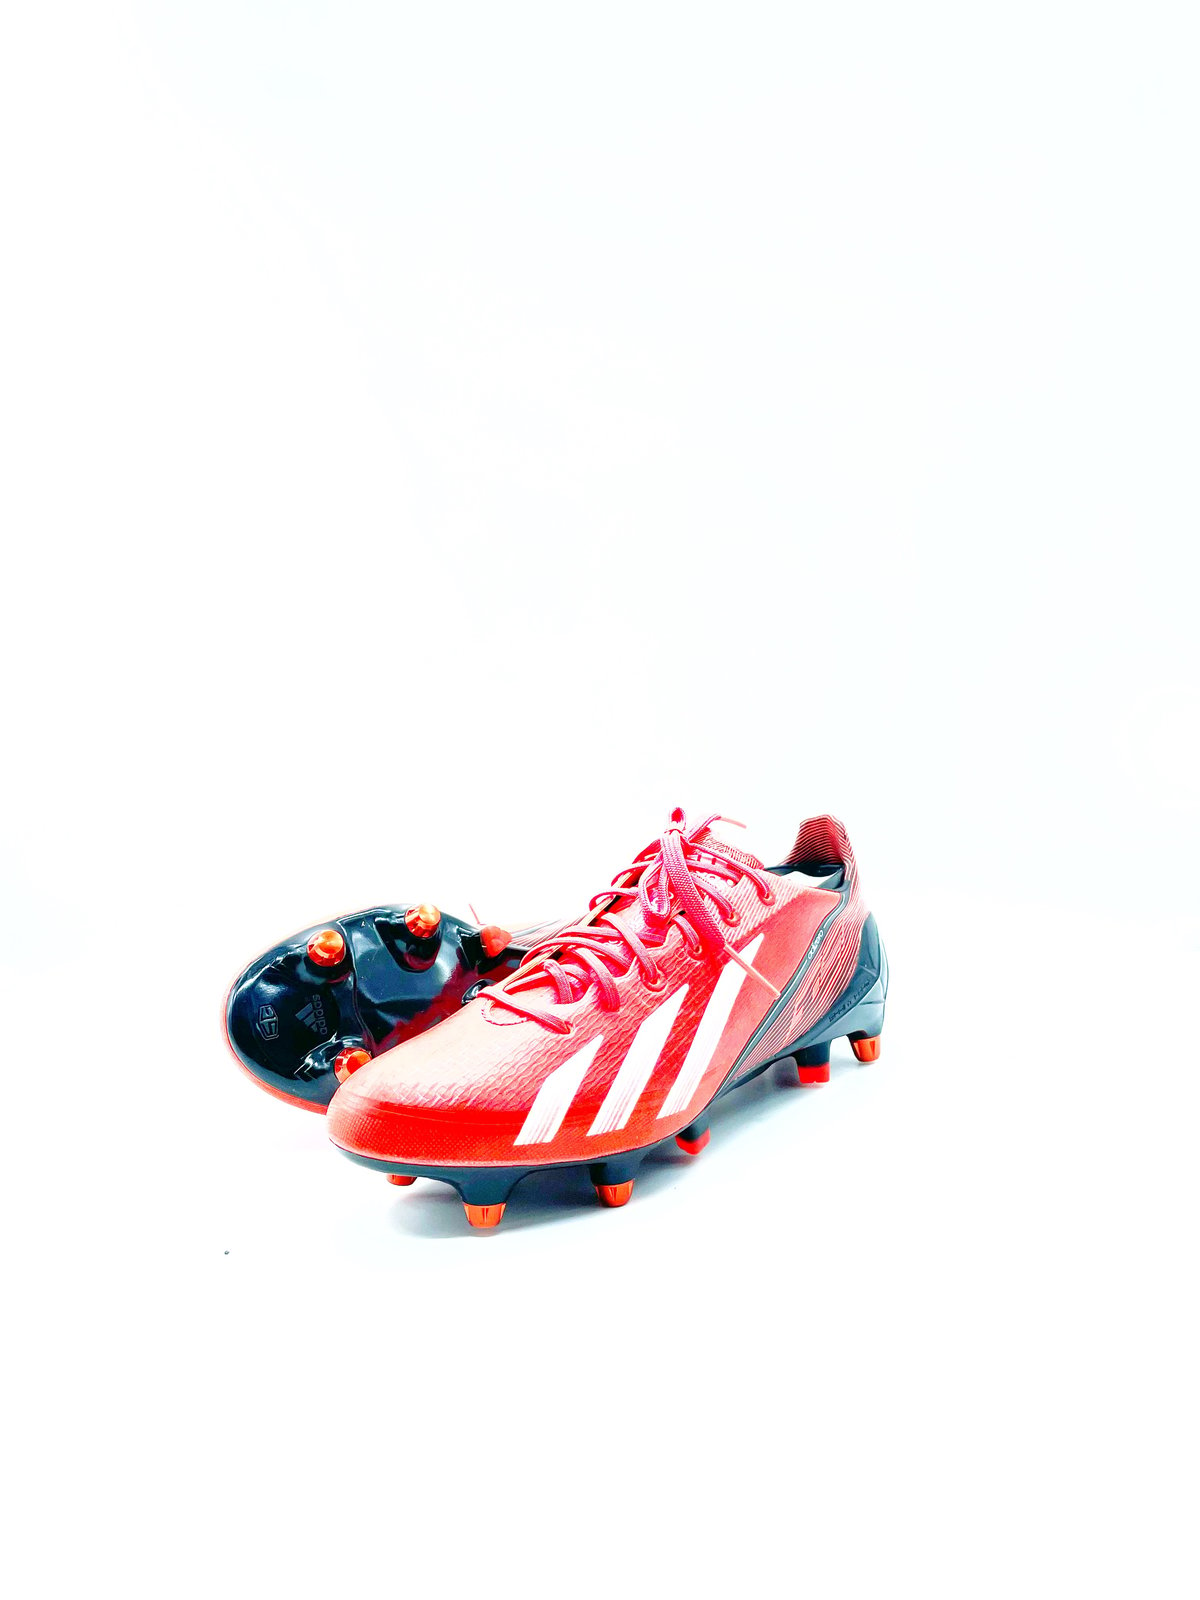 Tbtclassicfootballboots — Adidas adizero F50 sg RED